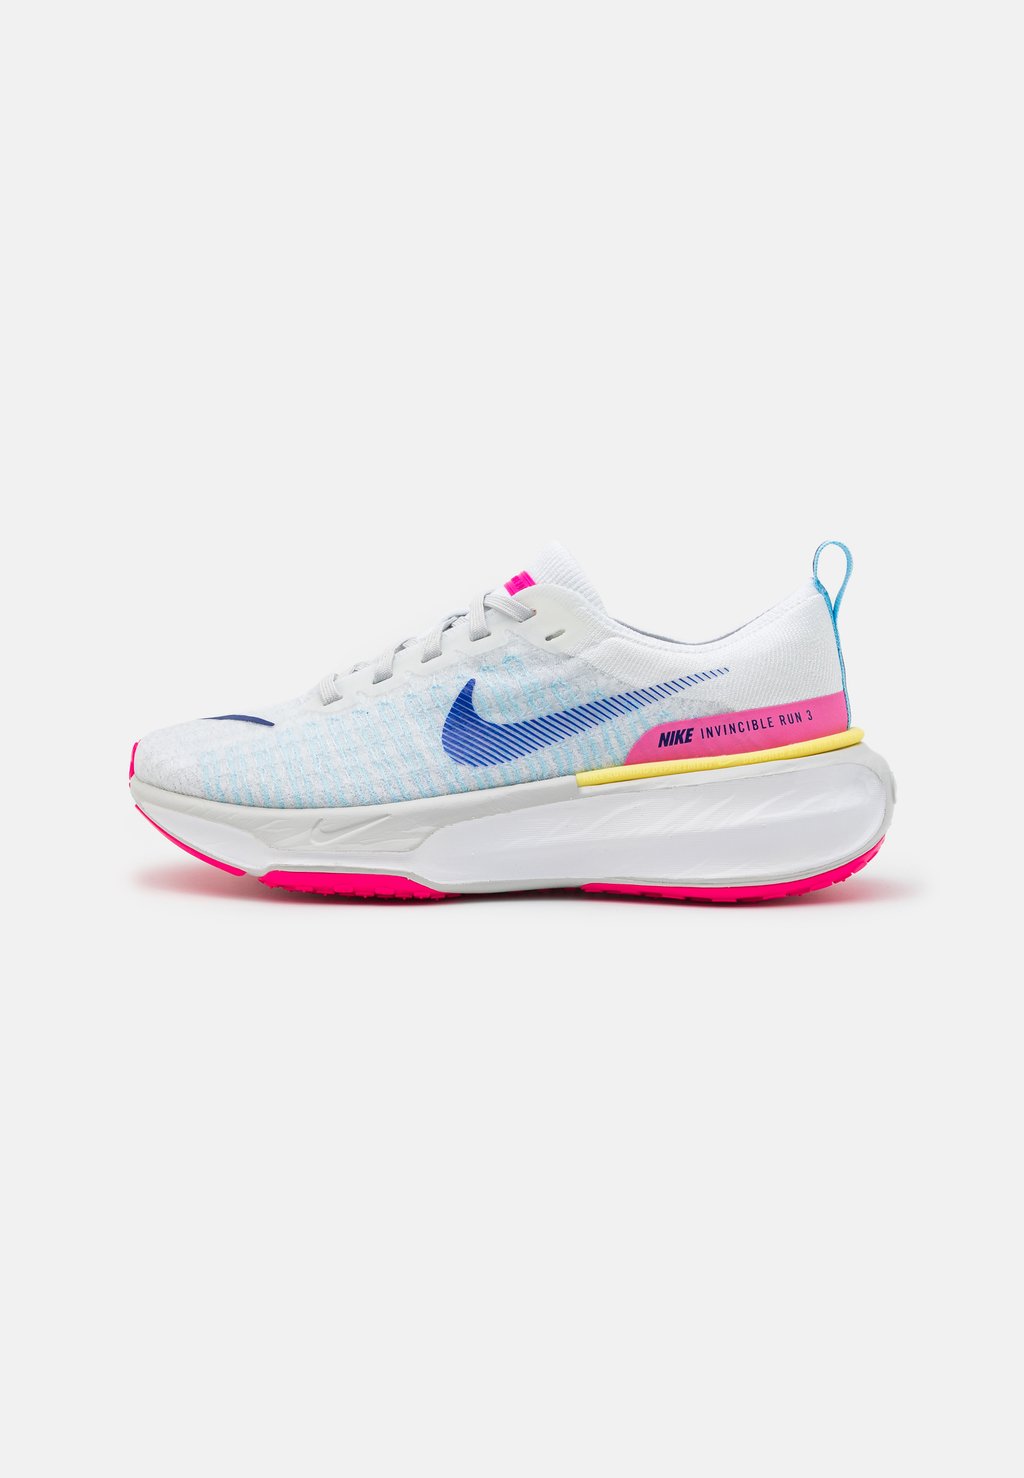 Нейтральные кроссовки ZOOMX INVINCIBLE RUN FK 3 Nike, цвет white/deep royal blue/photon dust/fierce pink/aquarius blue/light laser orange